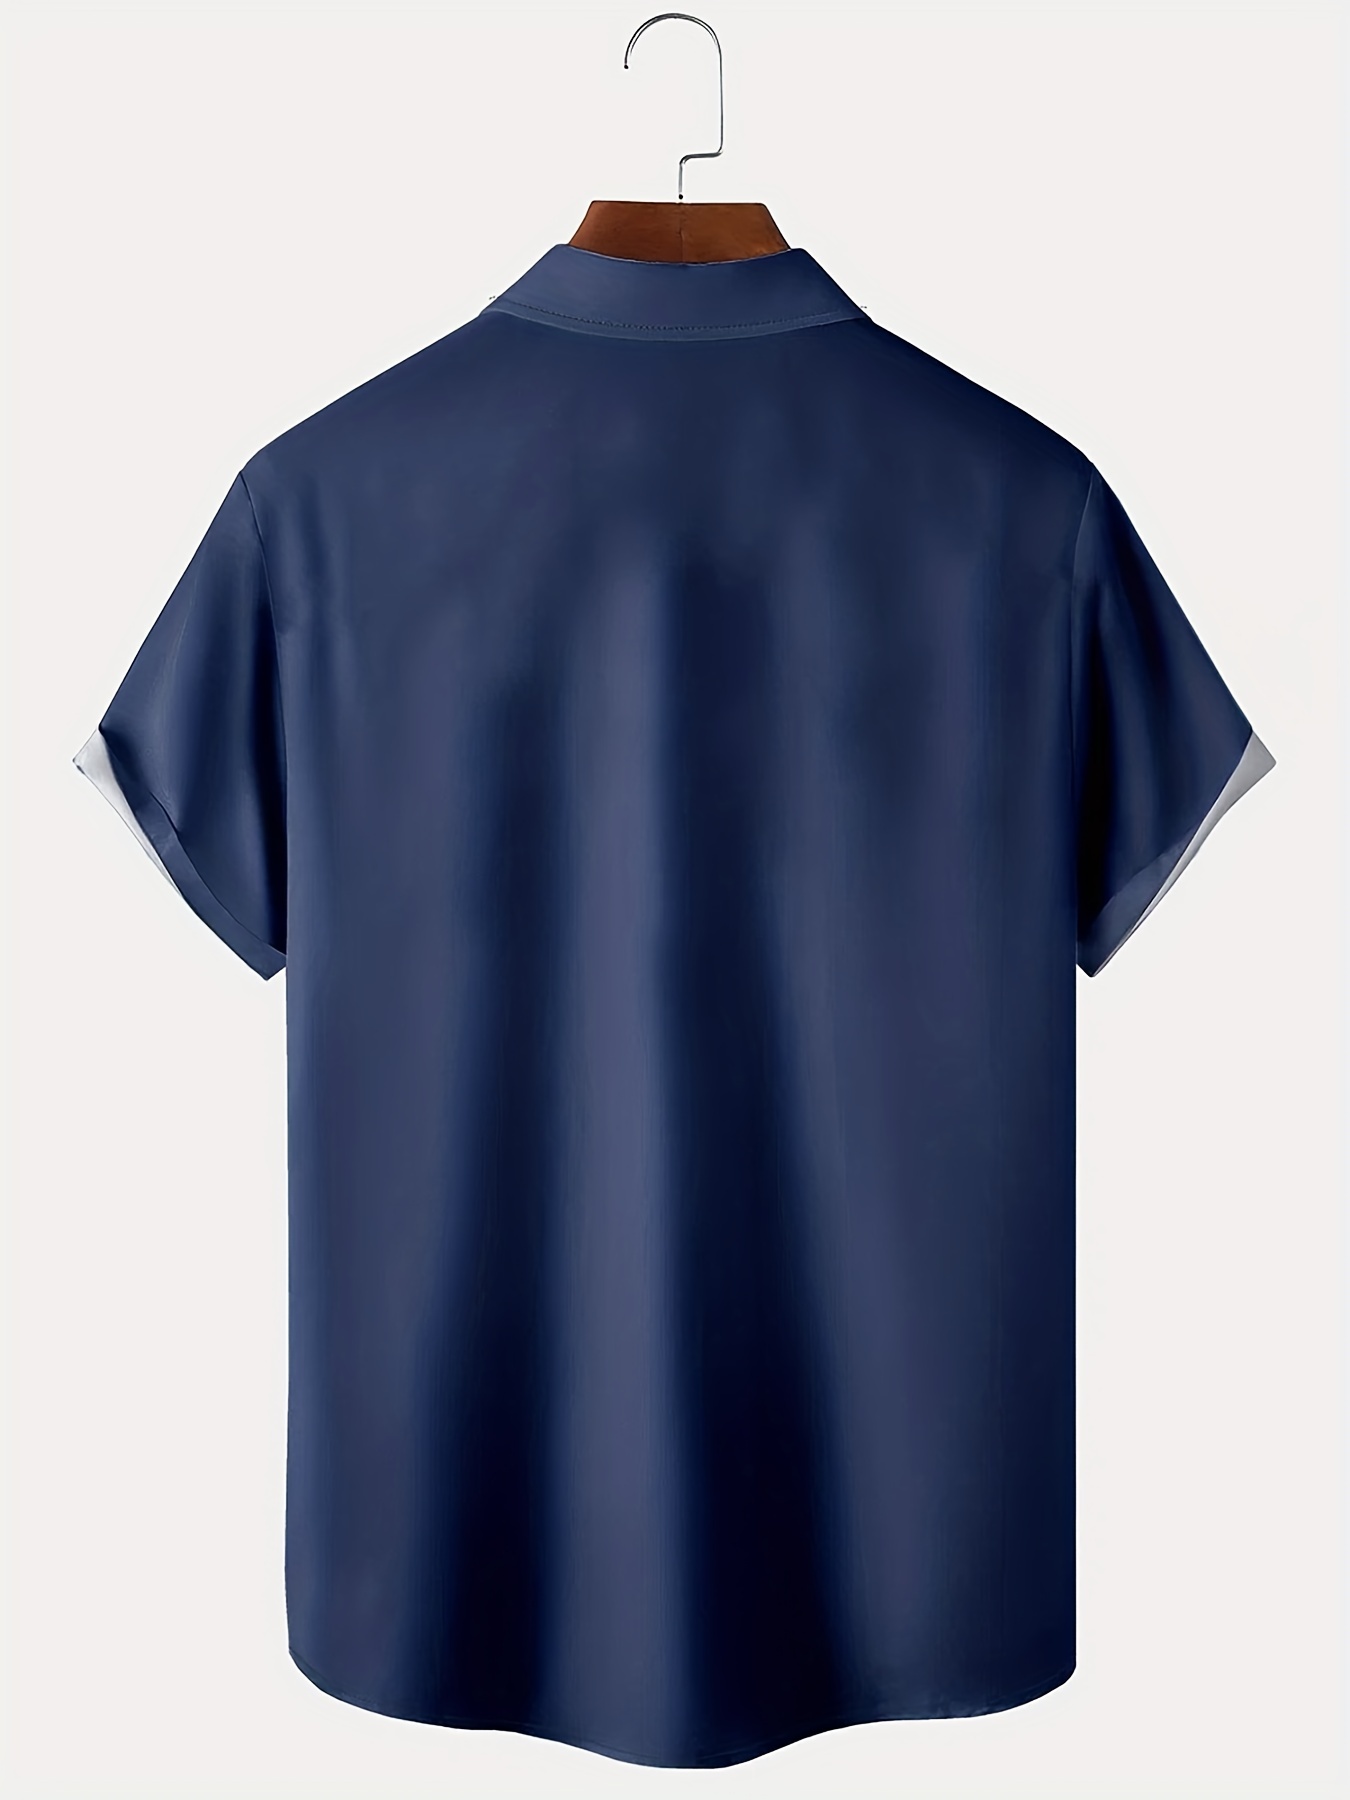 Fashion Casual Plain Royal Blue Short For Men And Women